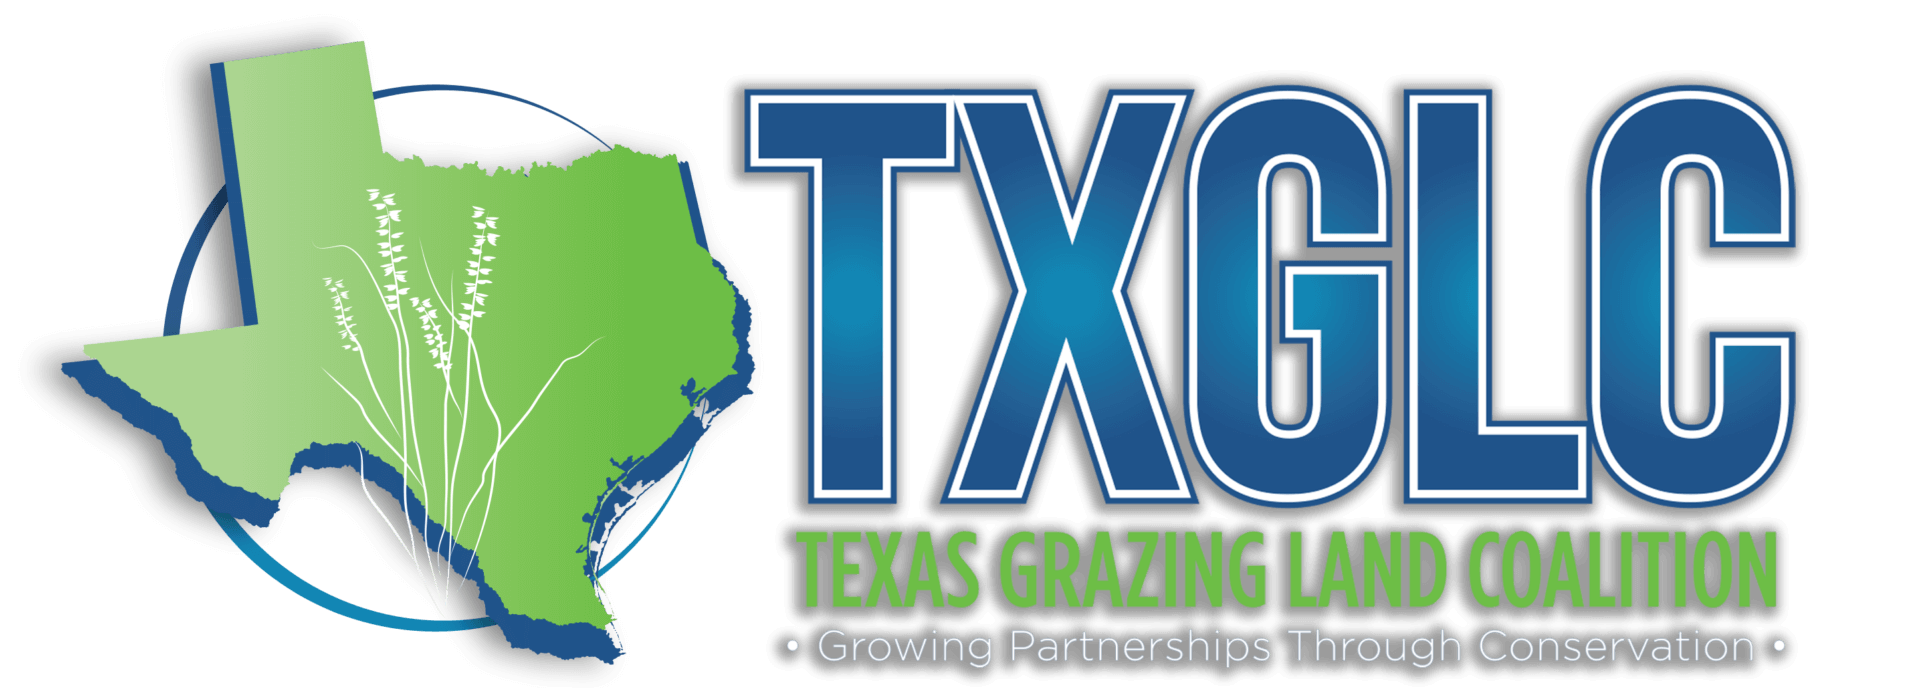 Texas Grazing Lands Coalition